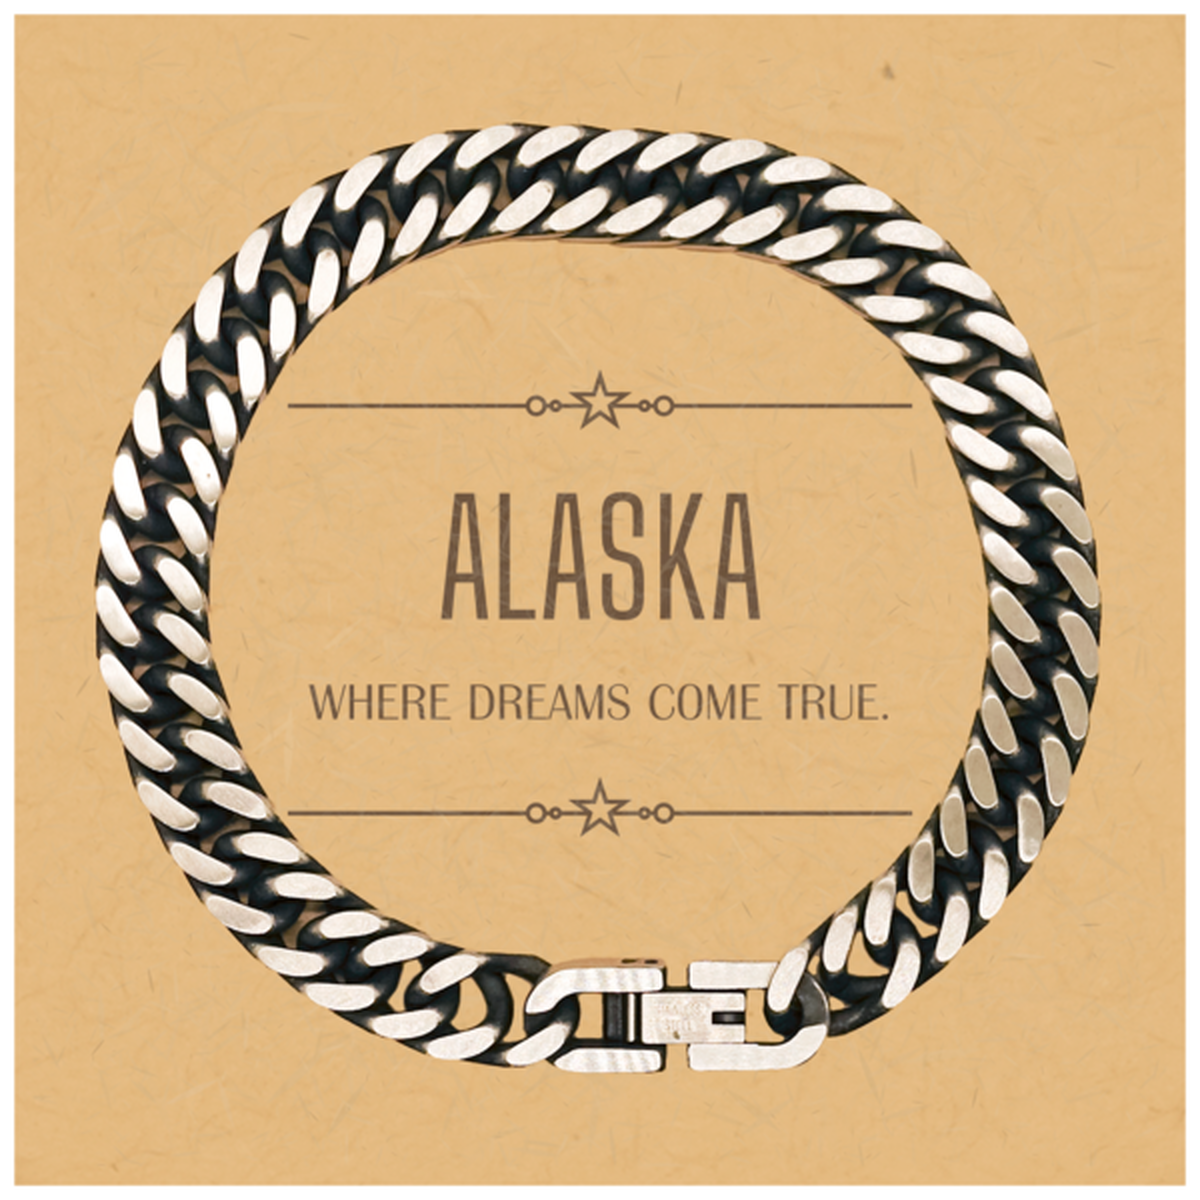 Love Alaska State Cuban Link Chain Bracelet, Alaska Where dreams come true, Birthday Christmas Inspirational Gifts For Alaska Men, Women, Friends